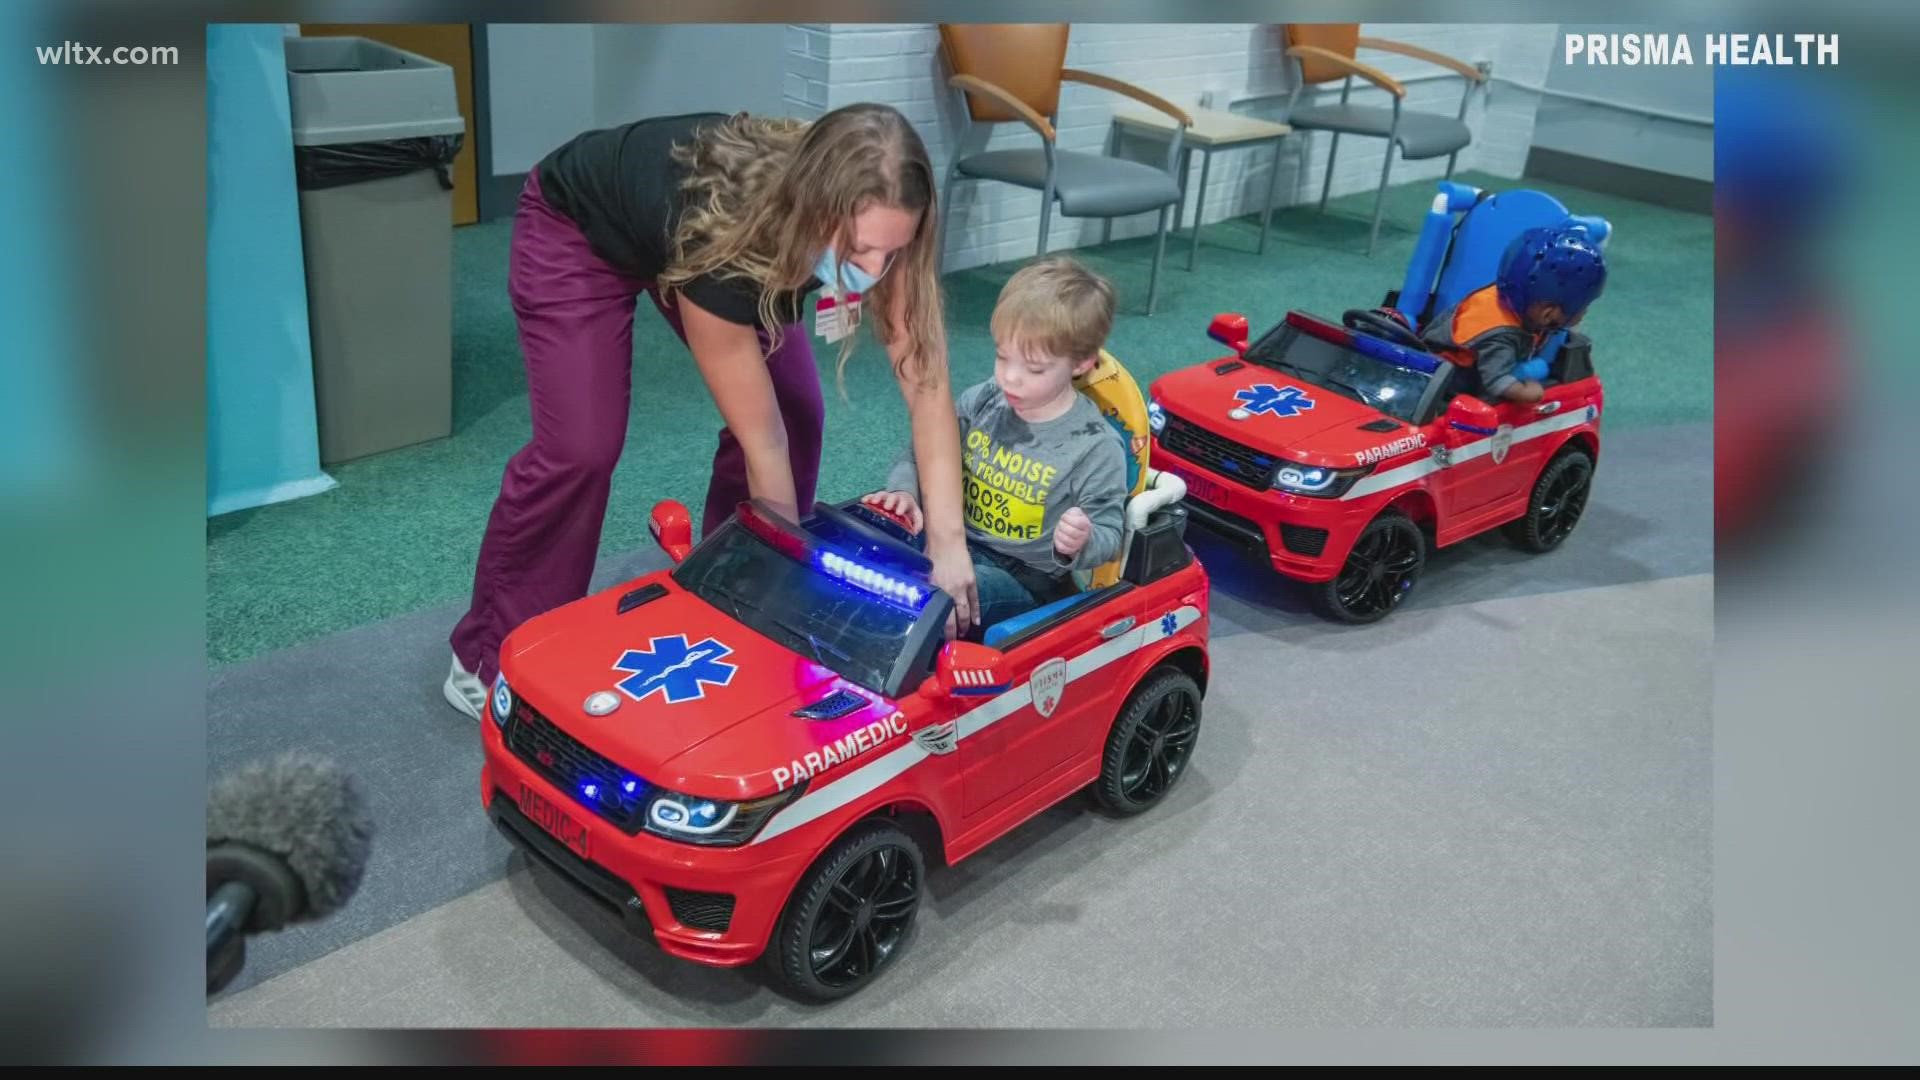 Prisma health employees donate toy cars to Columbia children 